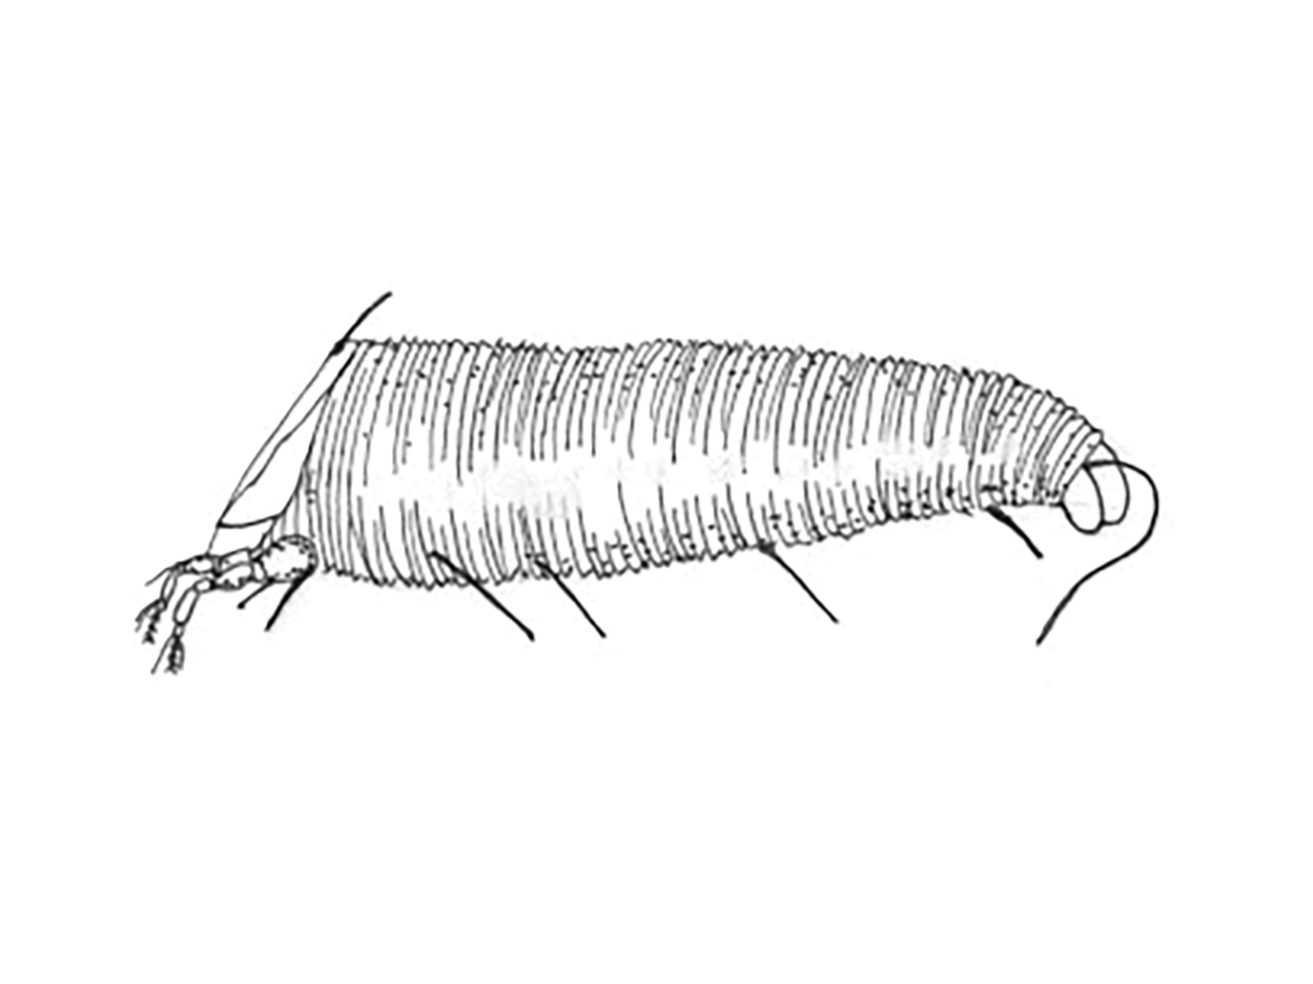 Adult redberry mite illustration